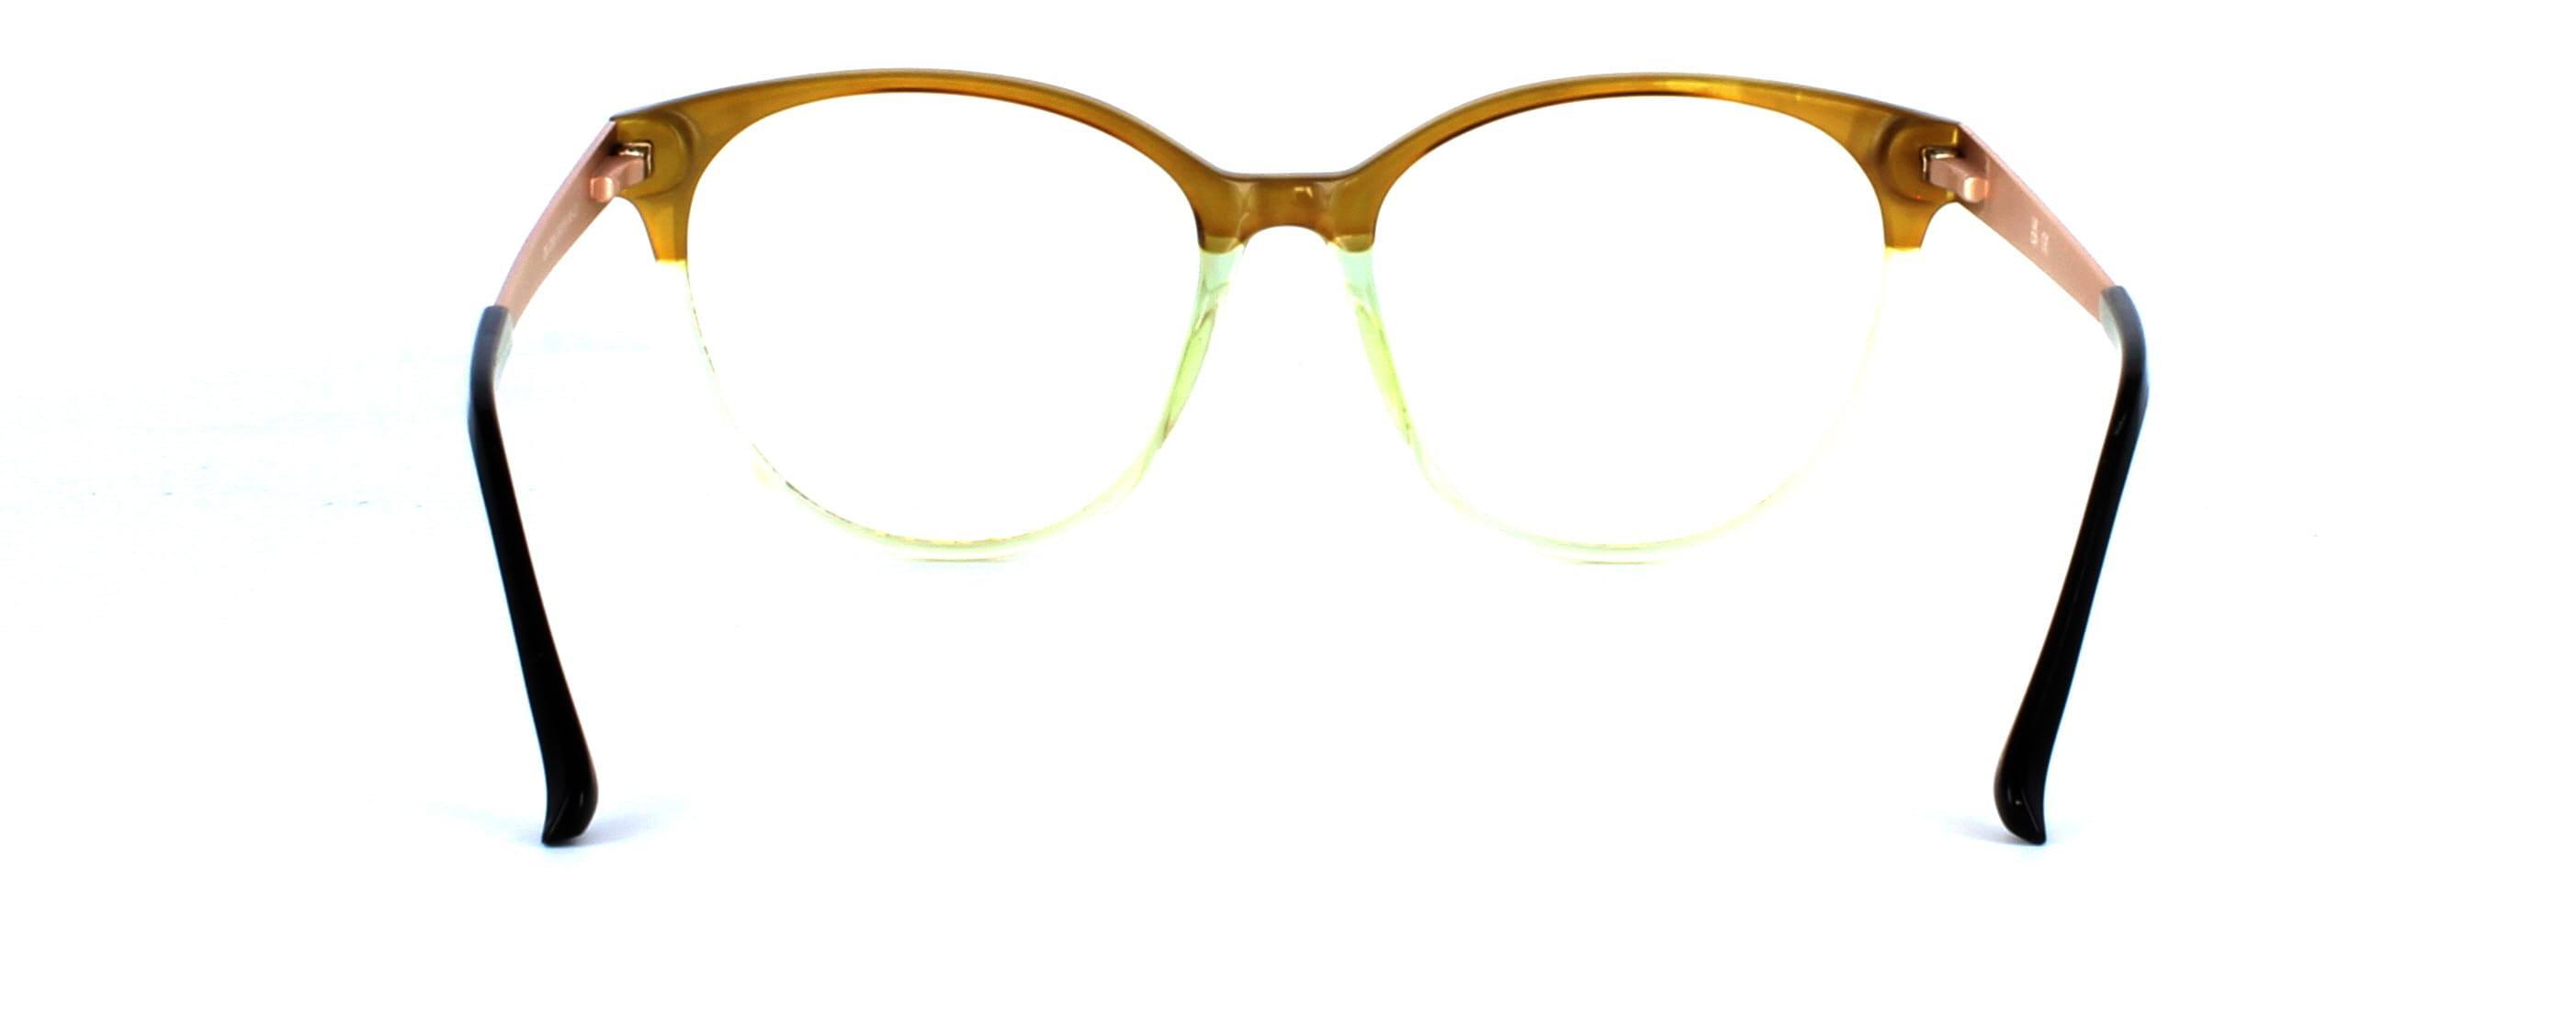 Chamaeleon - Ladies 2-tone plastic glasses - green & brown - image 3